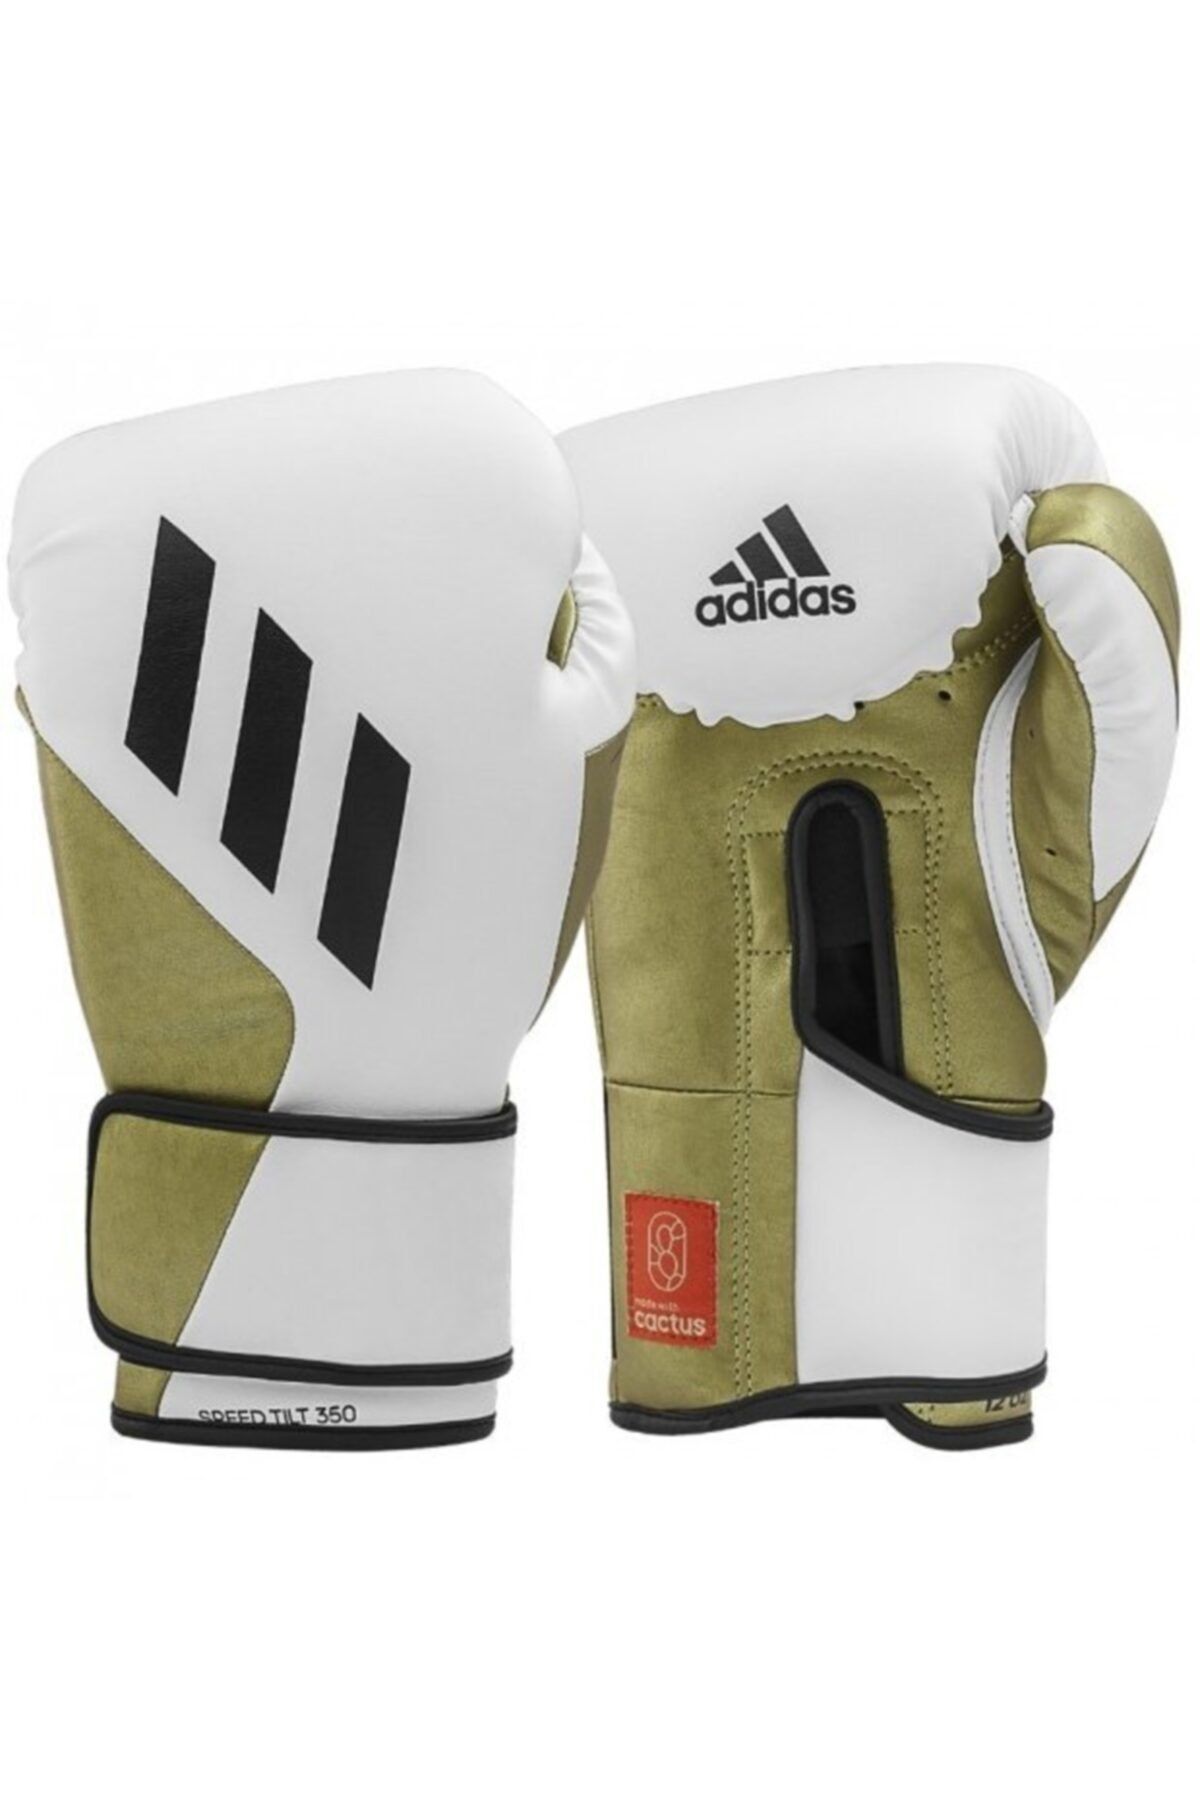 adidas Speed Tilt 350v Pro Boks Eldiveni Boxing Gloves Spd350vtg